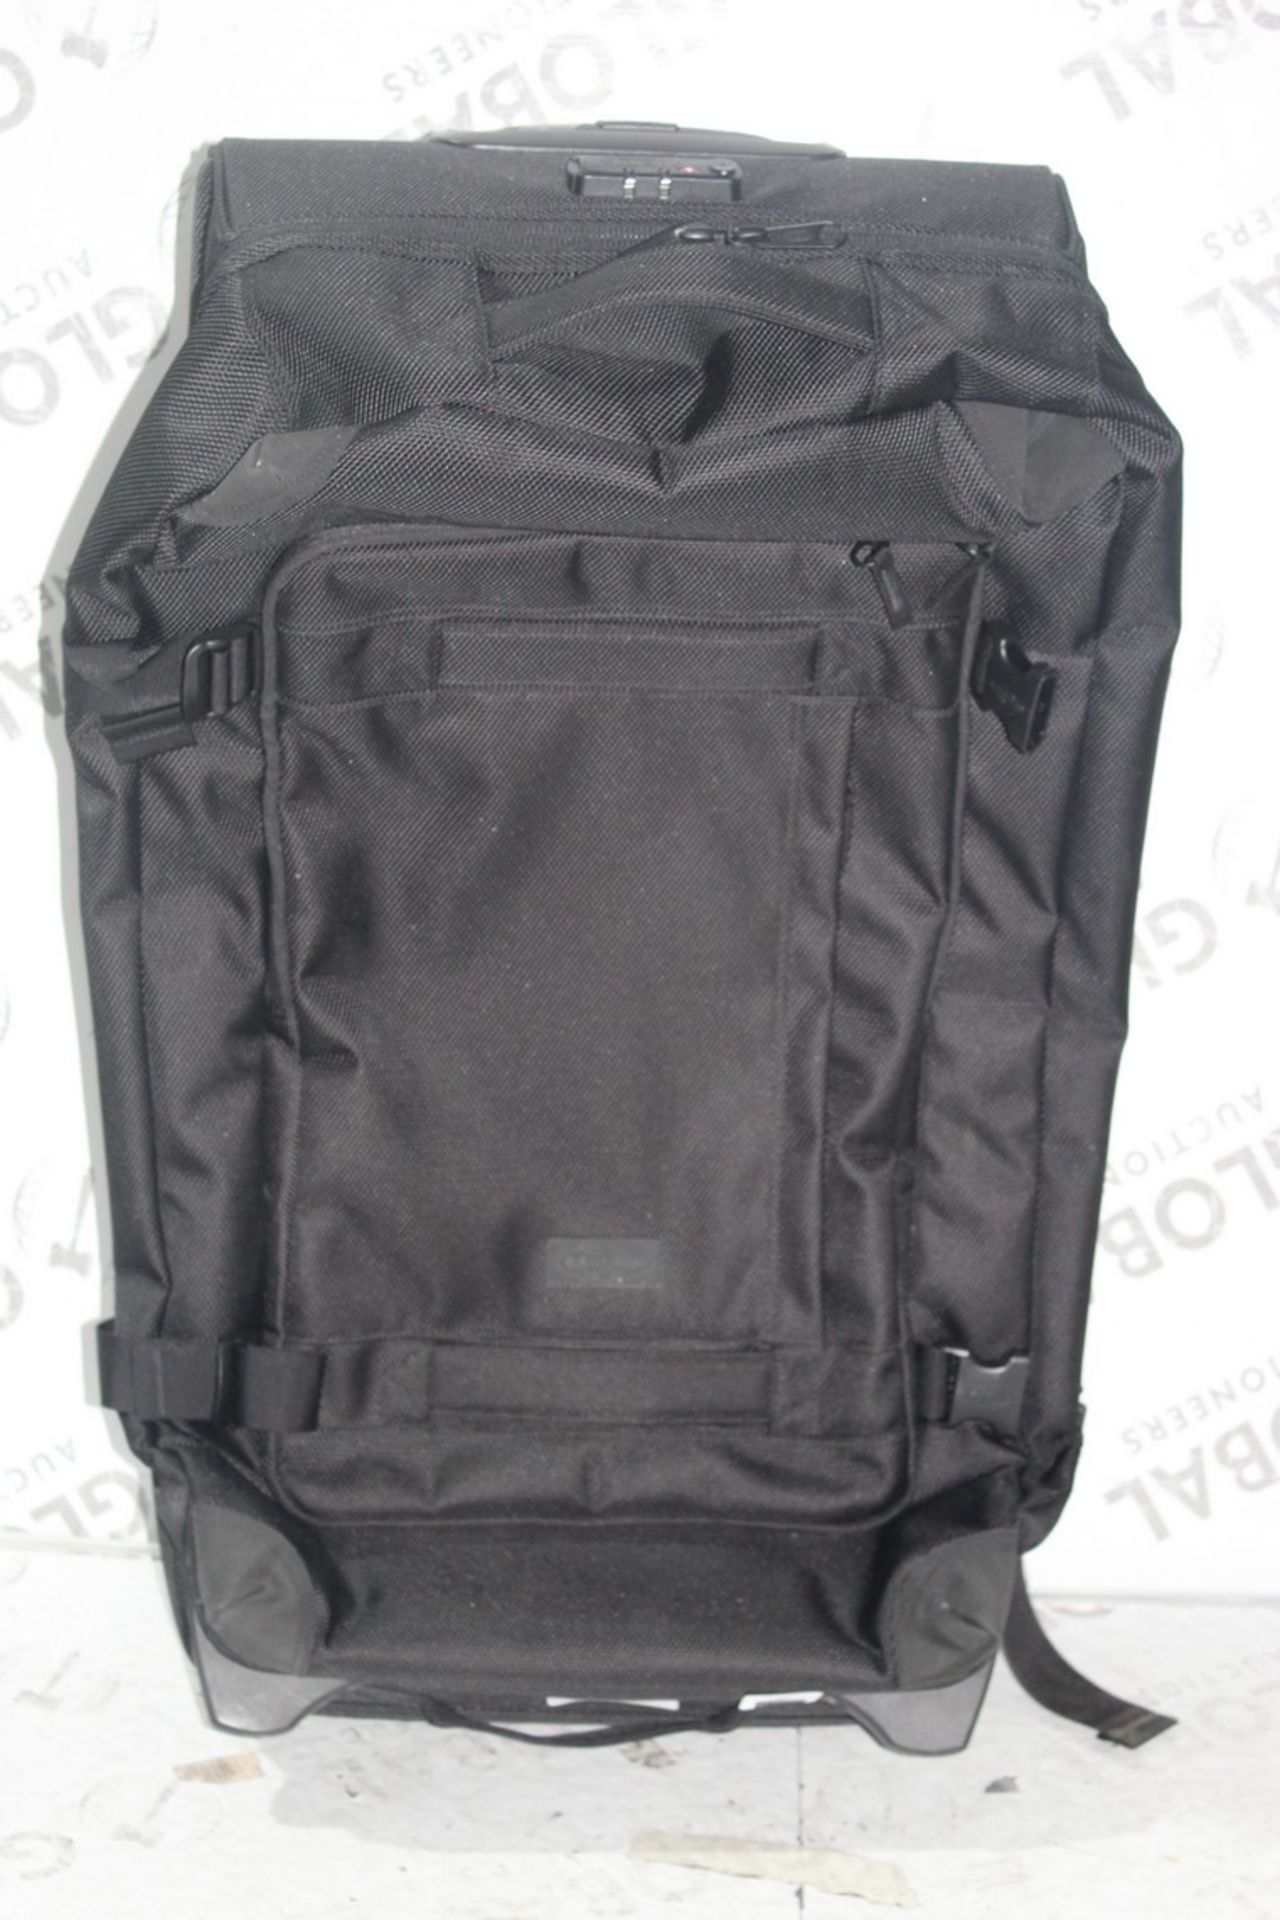 Eastpak Black Wheeled Soft Shell Duffle Bag, RRP£1